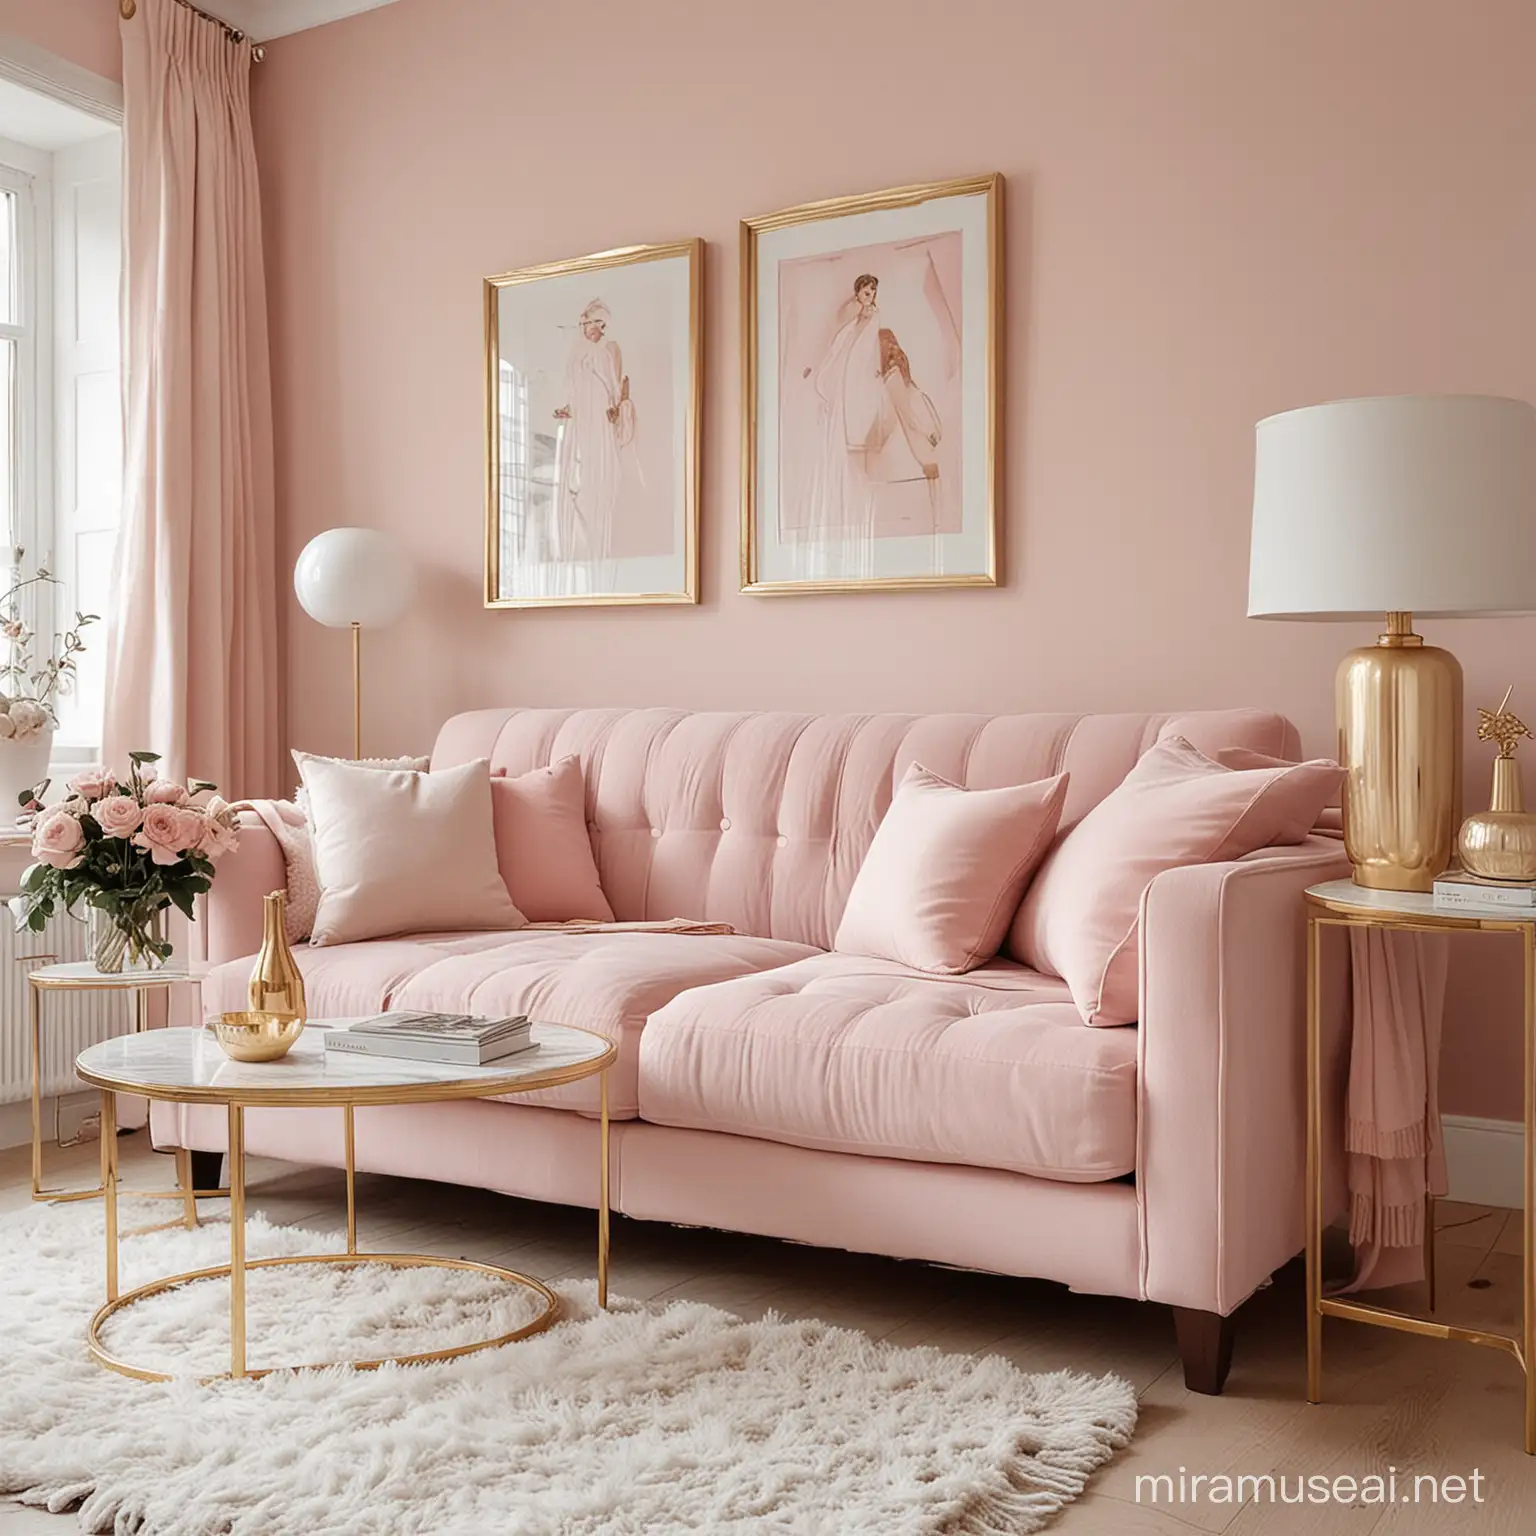 Elegant Blush Pink and Gold Home Interior Design